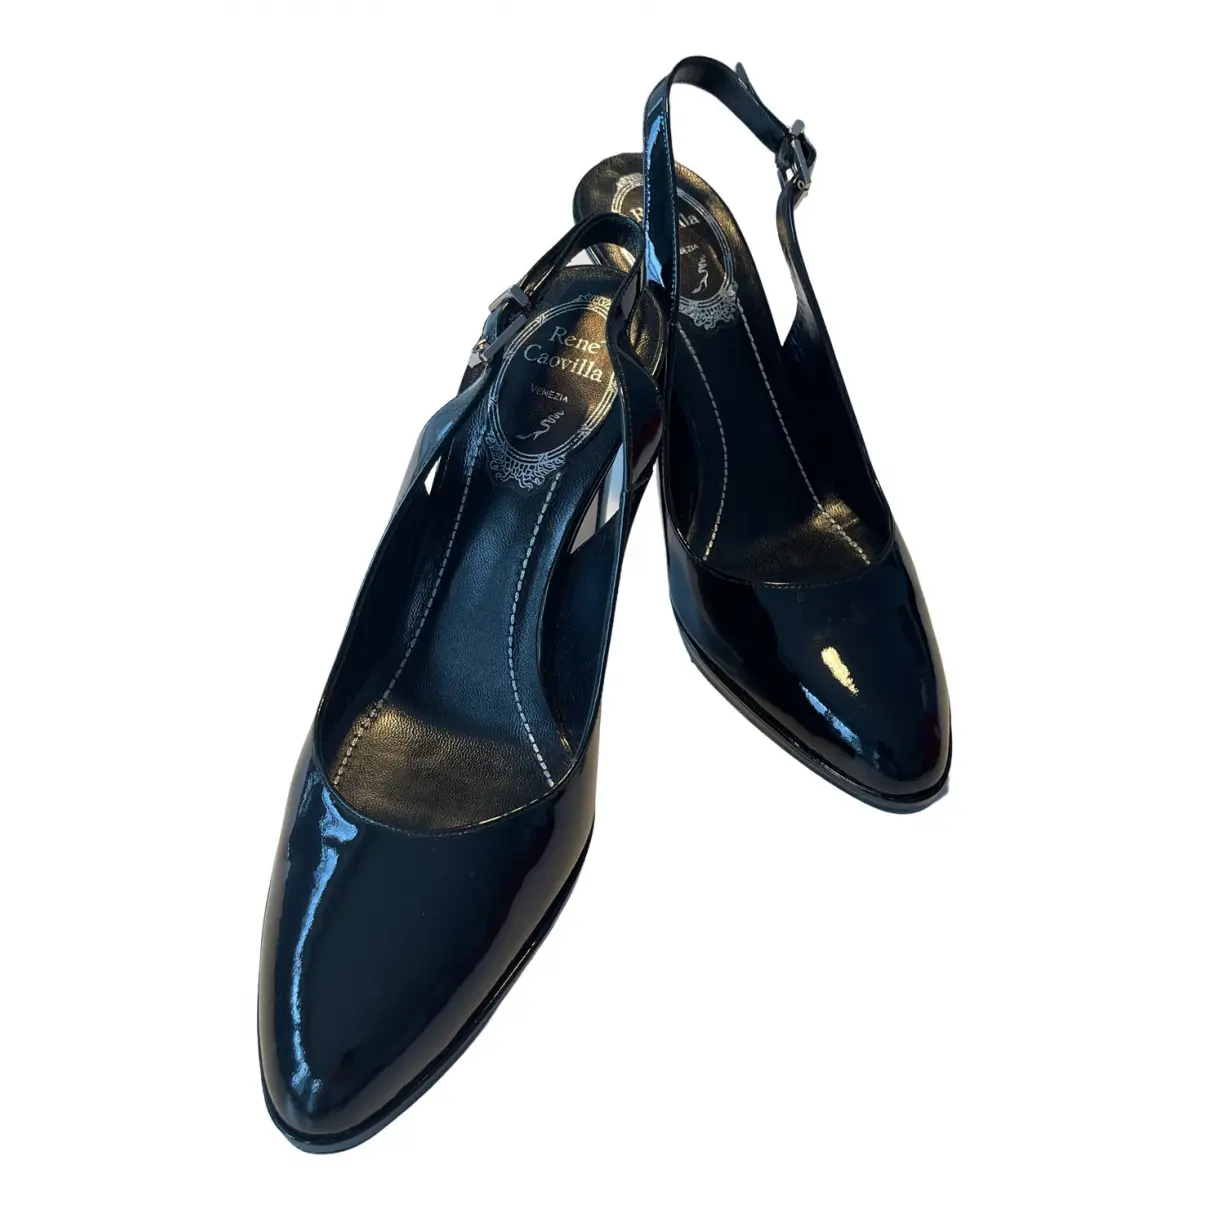 Patent leather heels Rene Caovilla